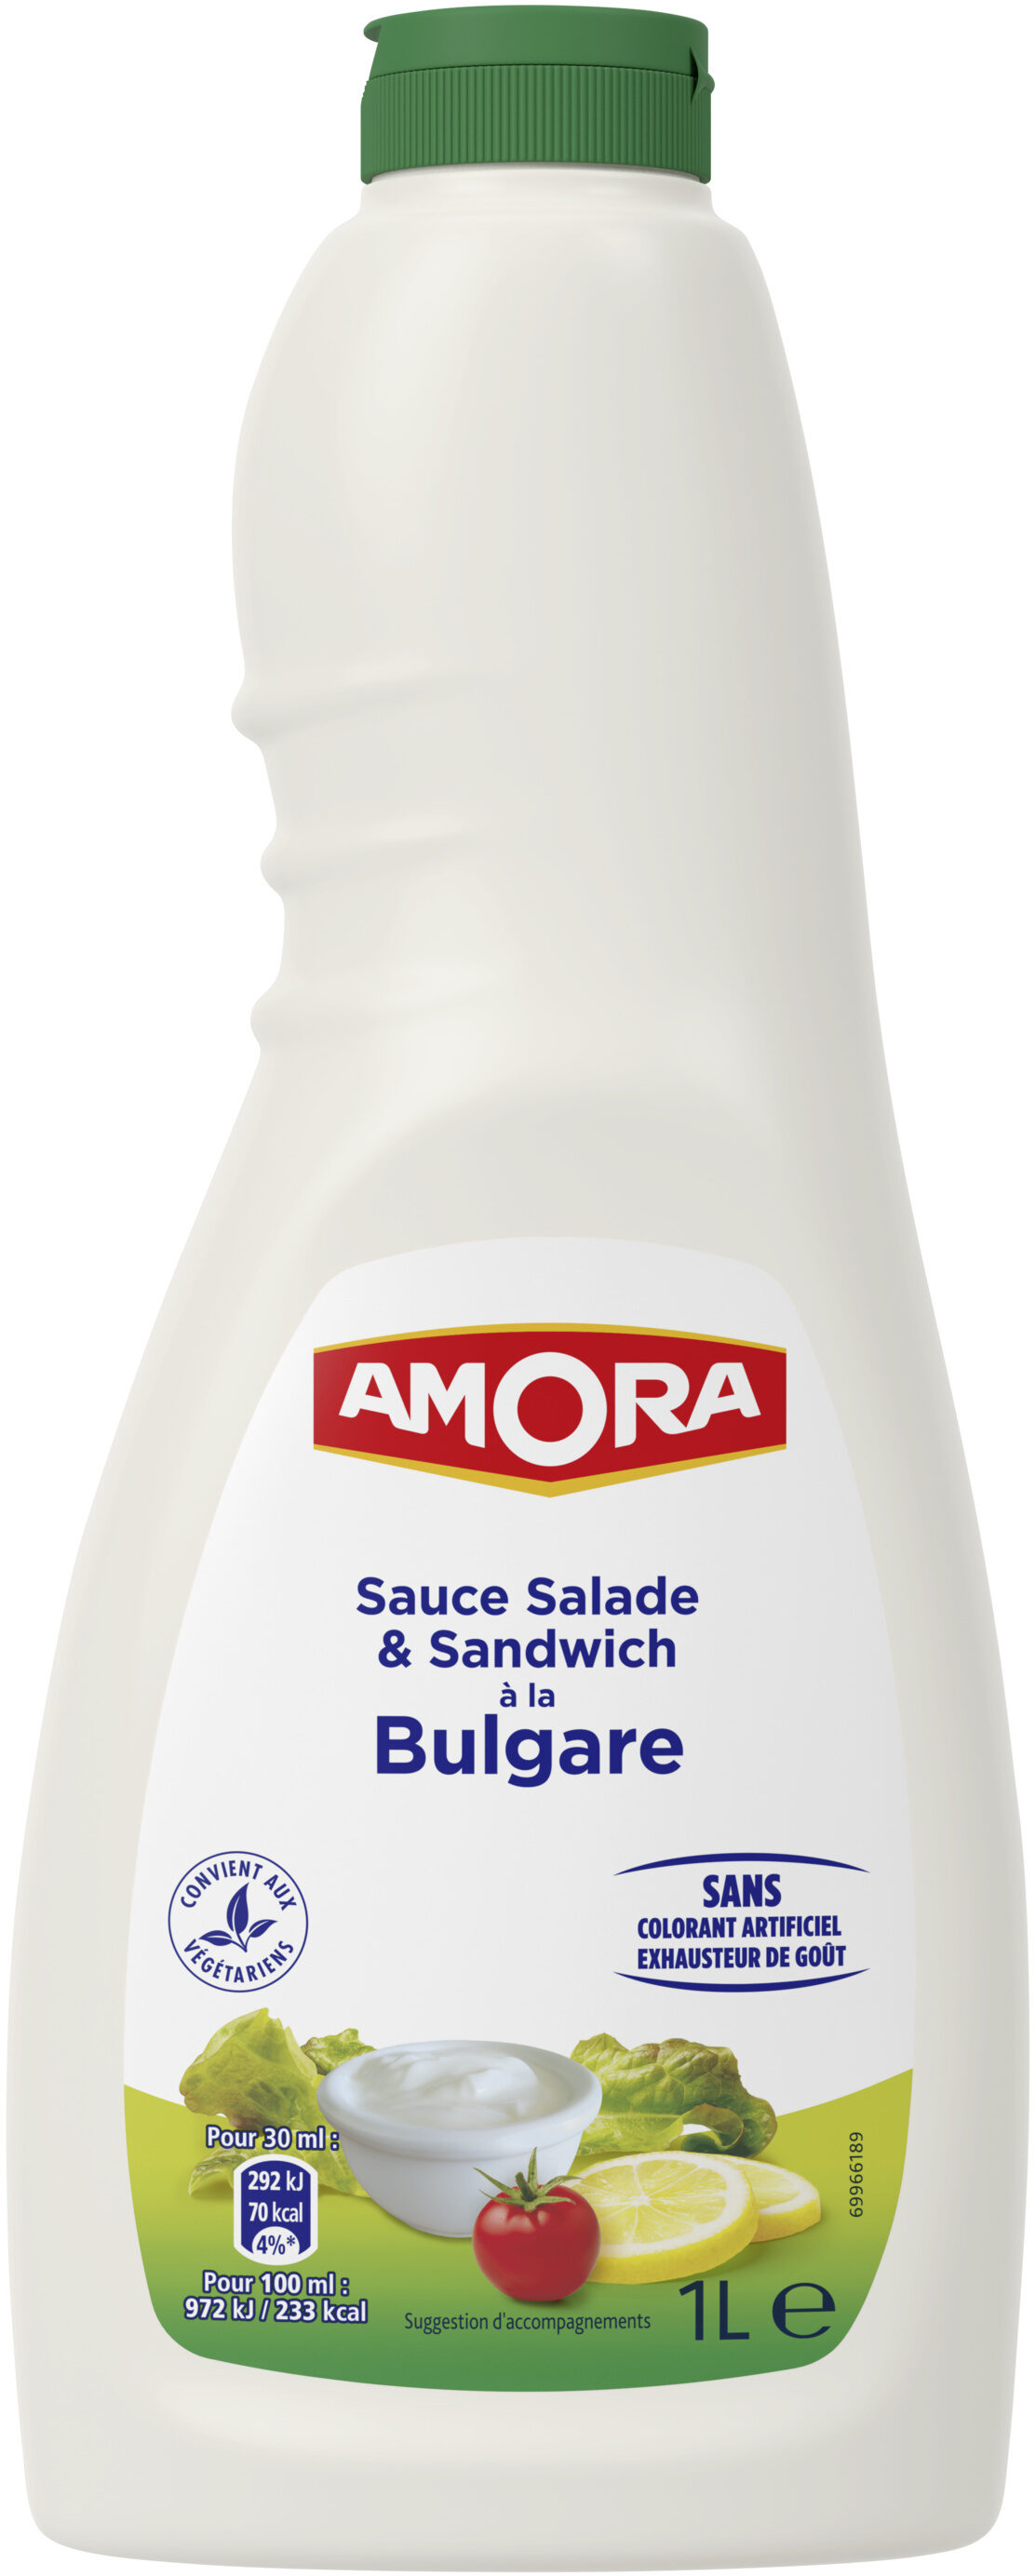 Amora Sauce Salade & Sandwich à la Bulgare 1L - Product - fr